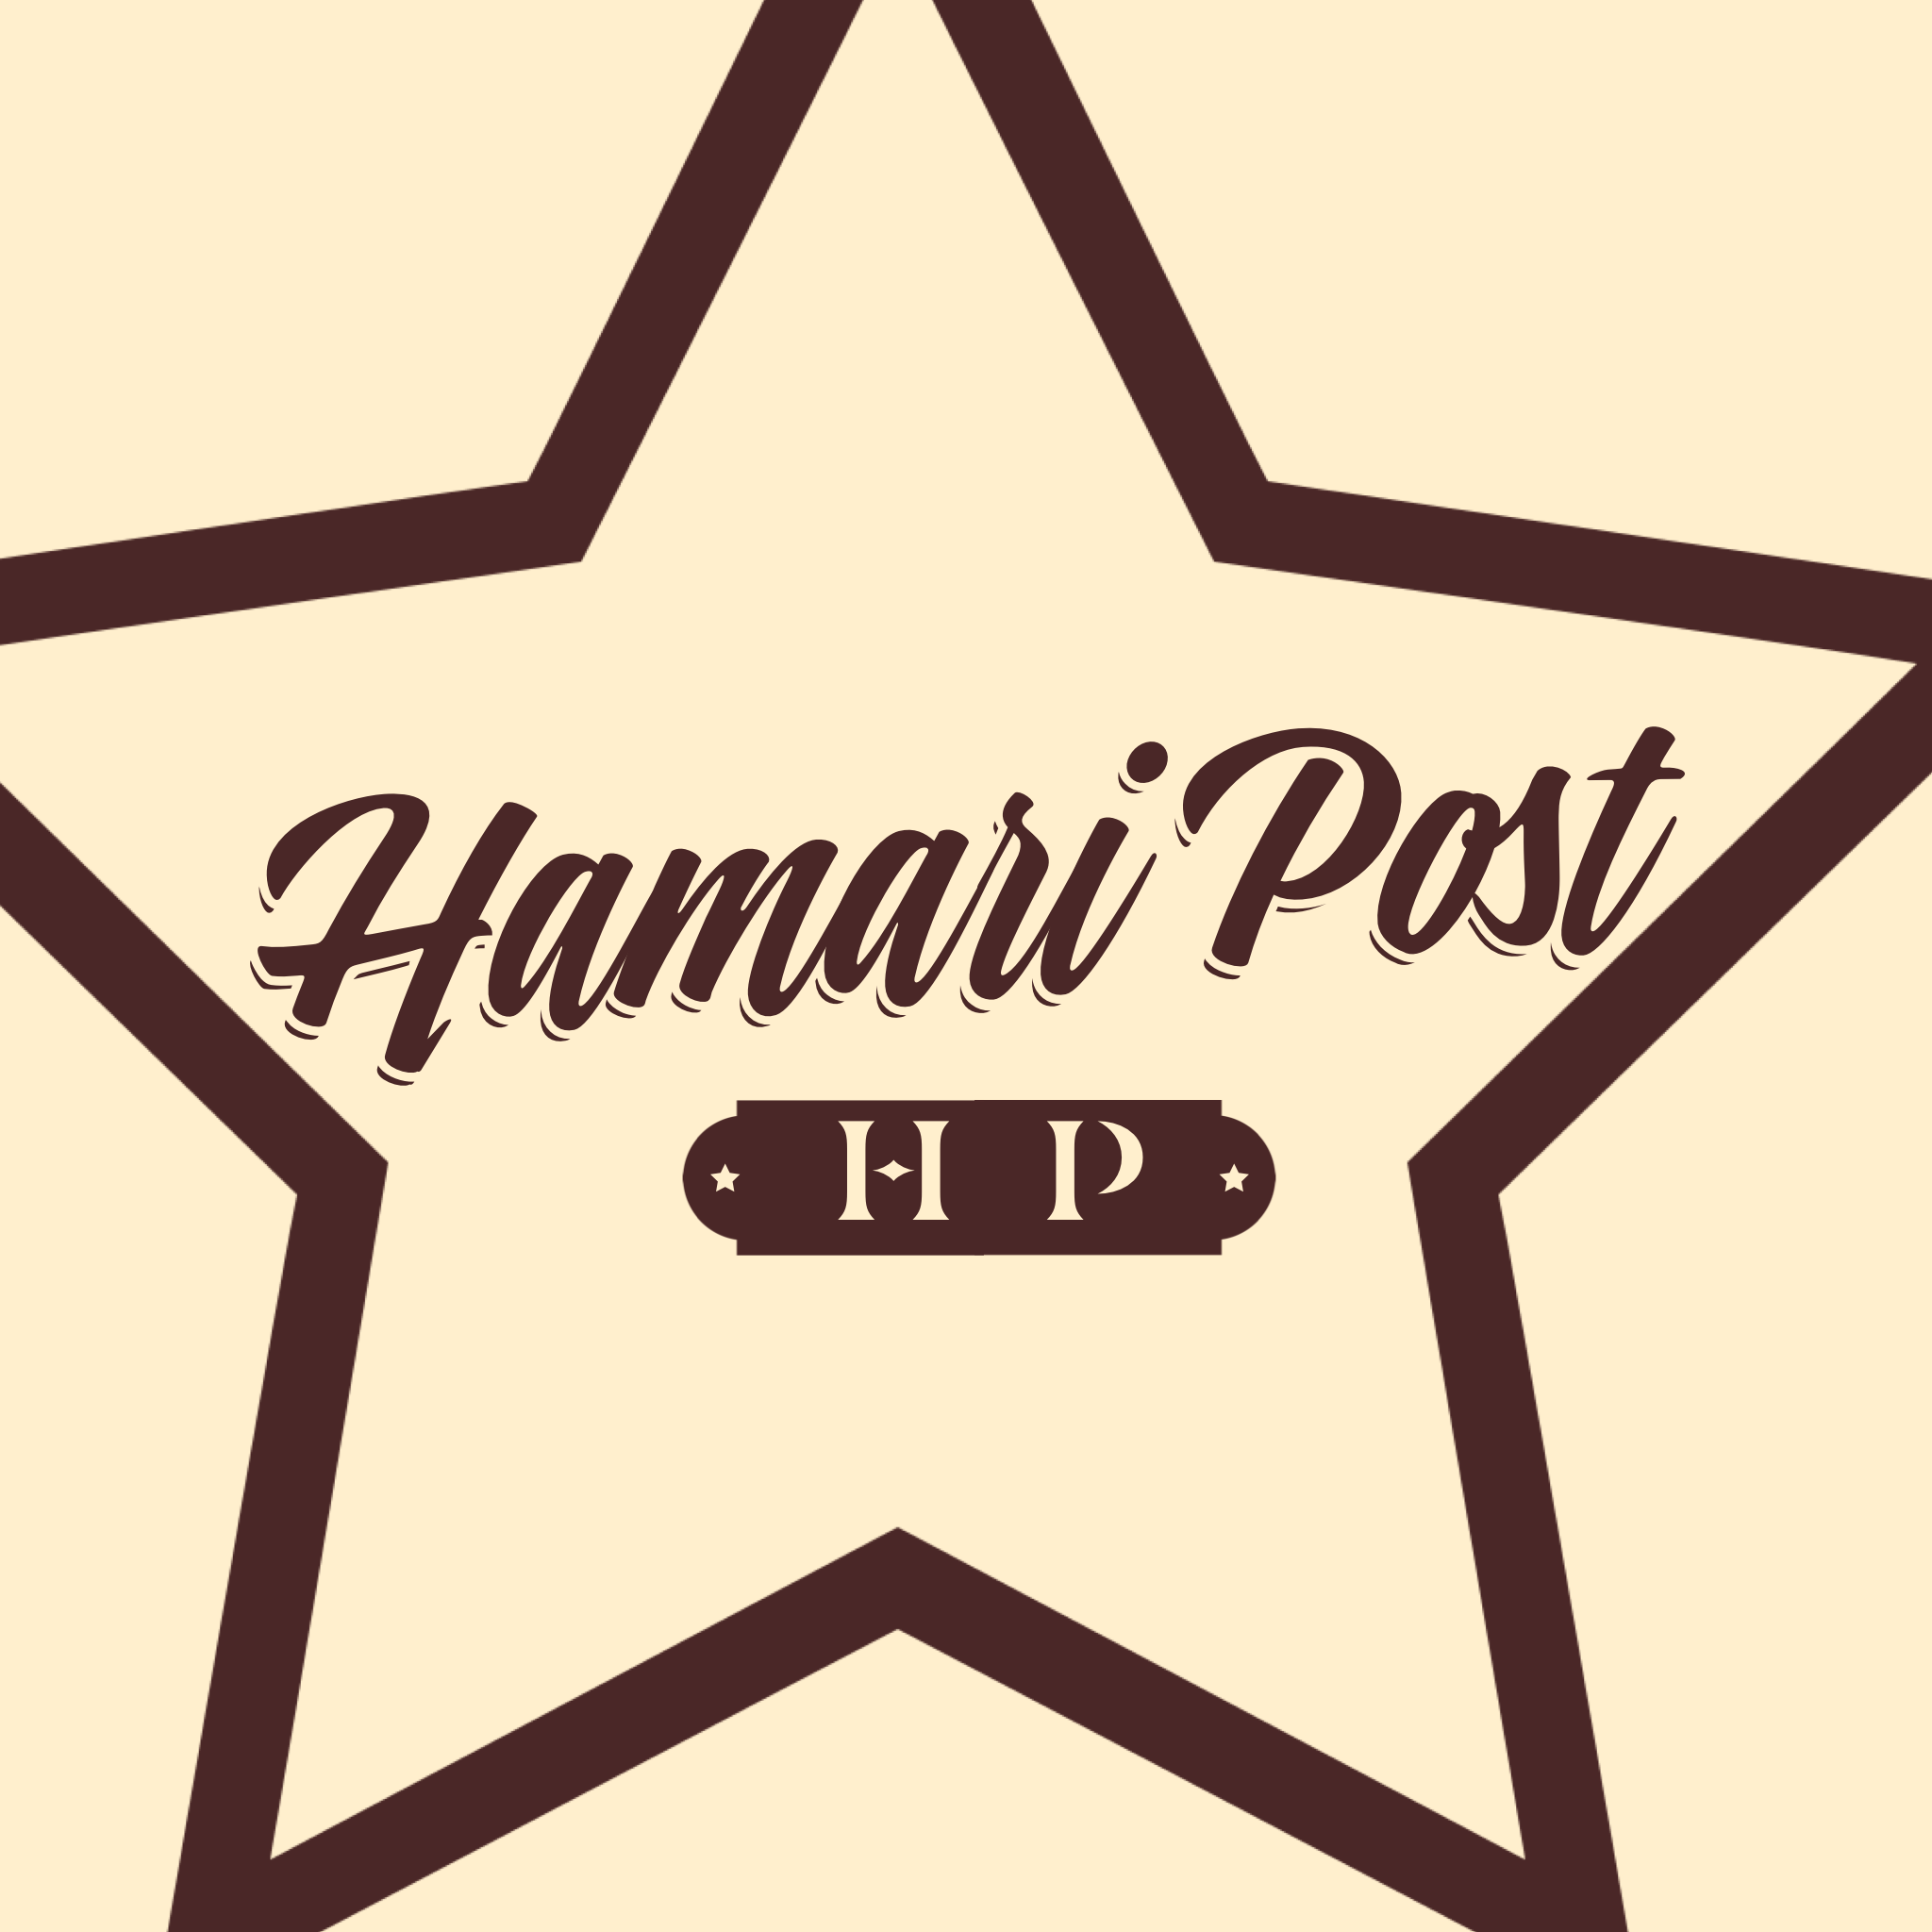 Hamari Post